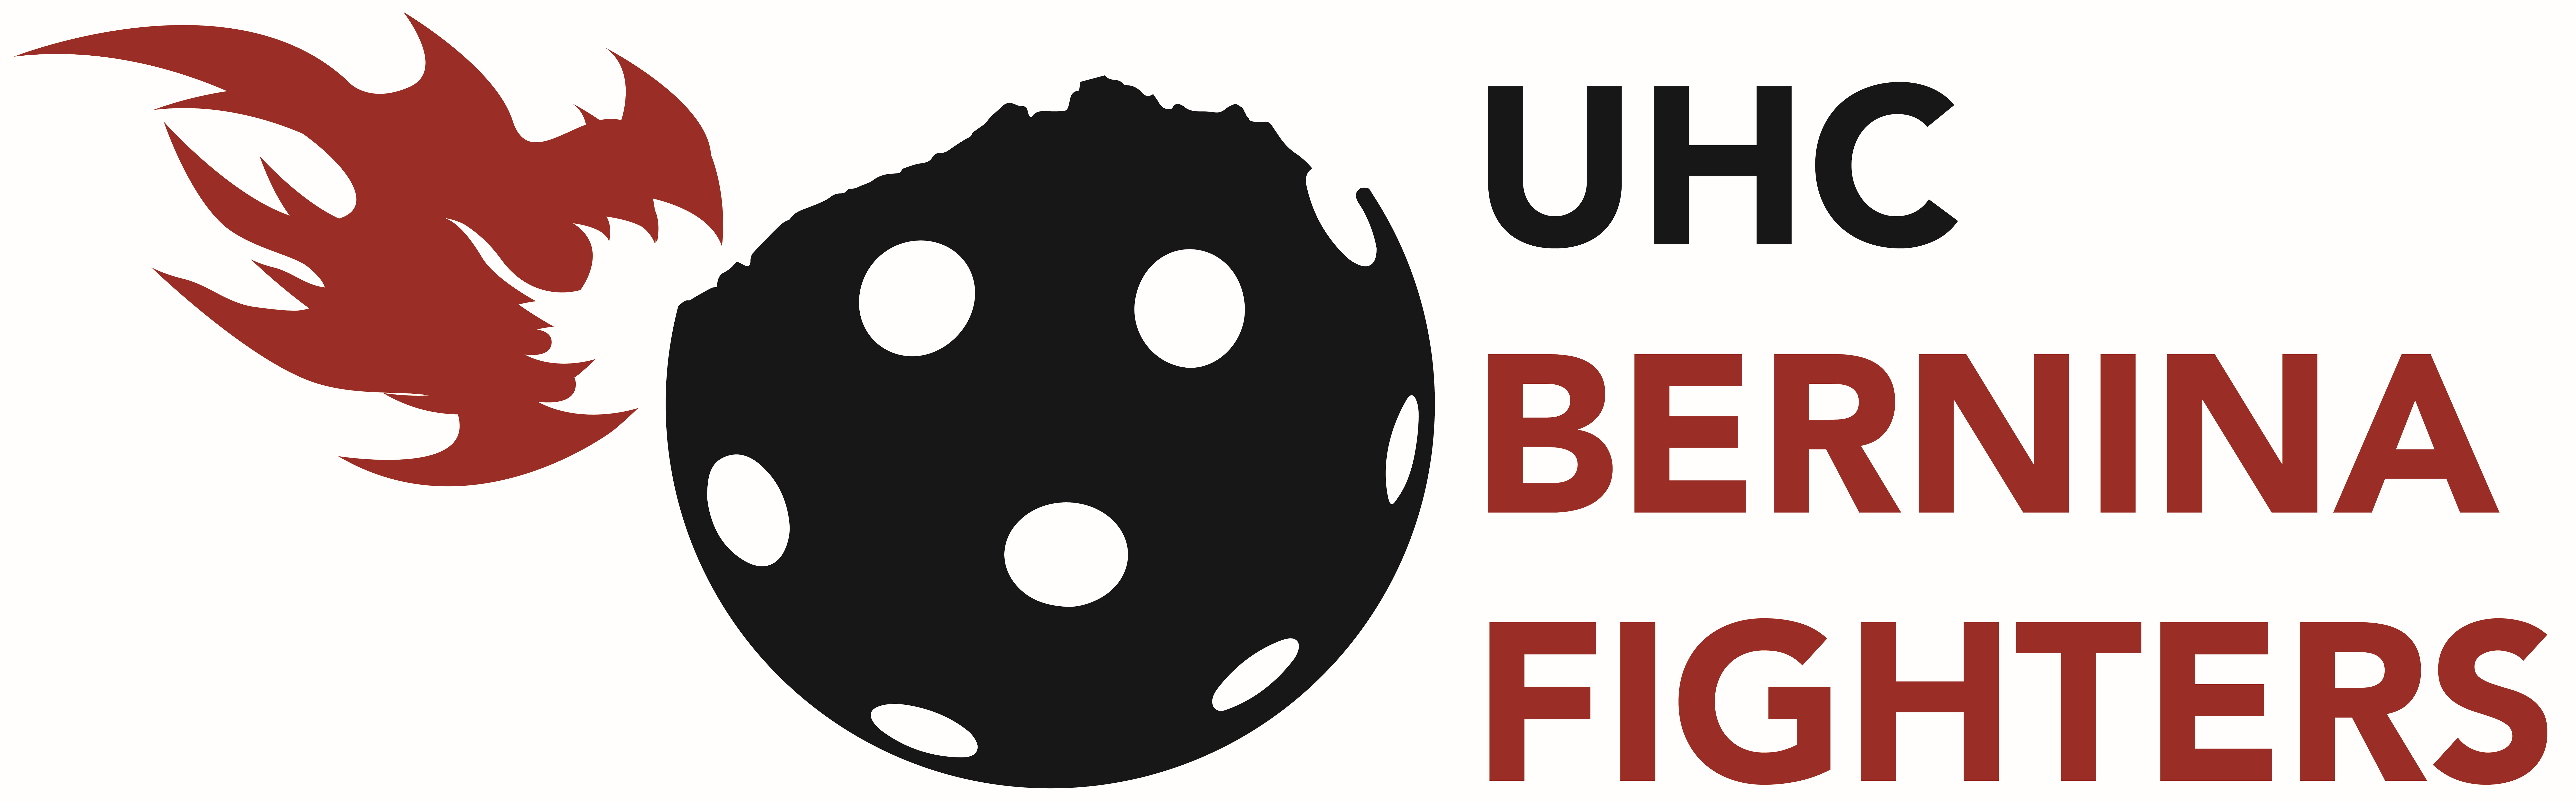 UHC Bernina Fighters